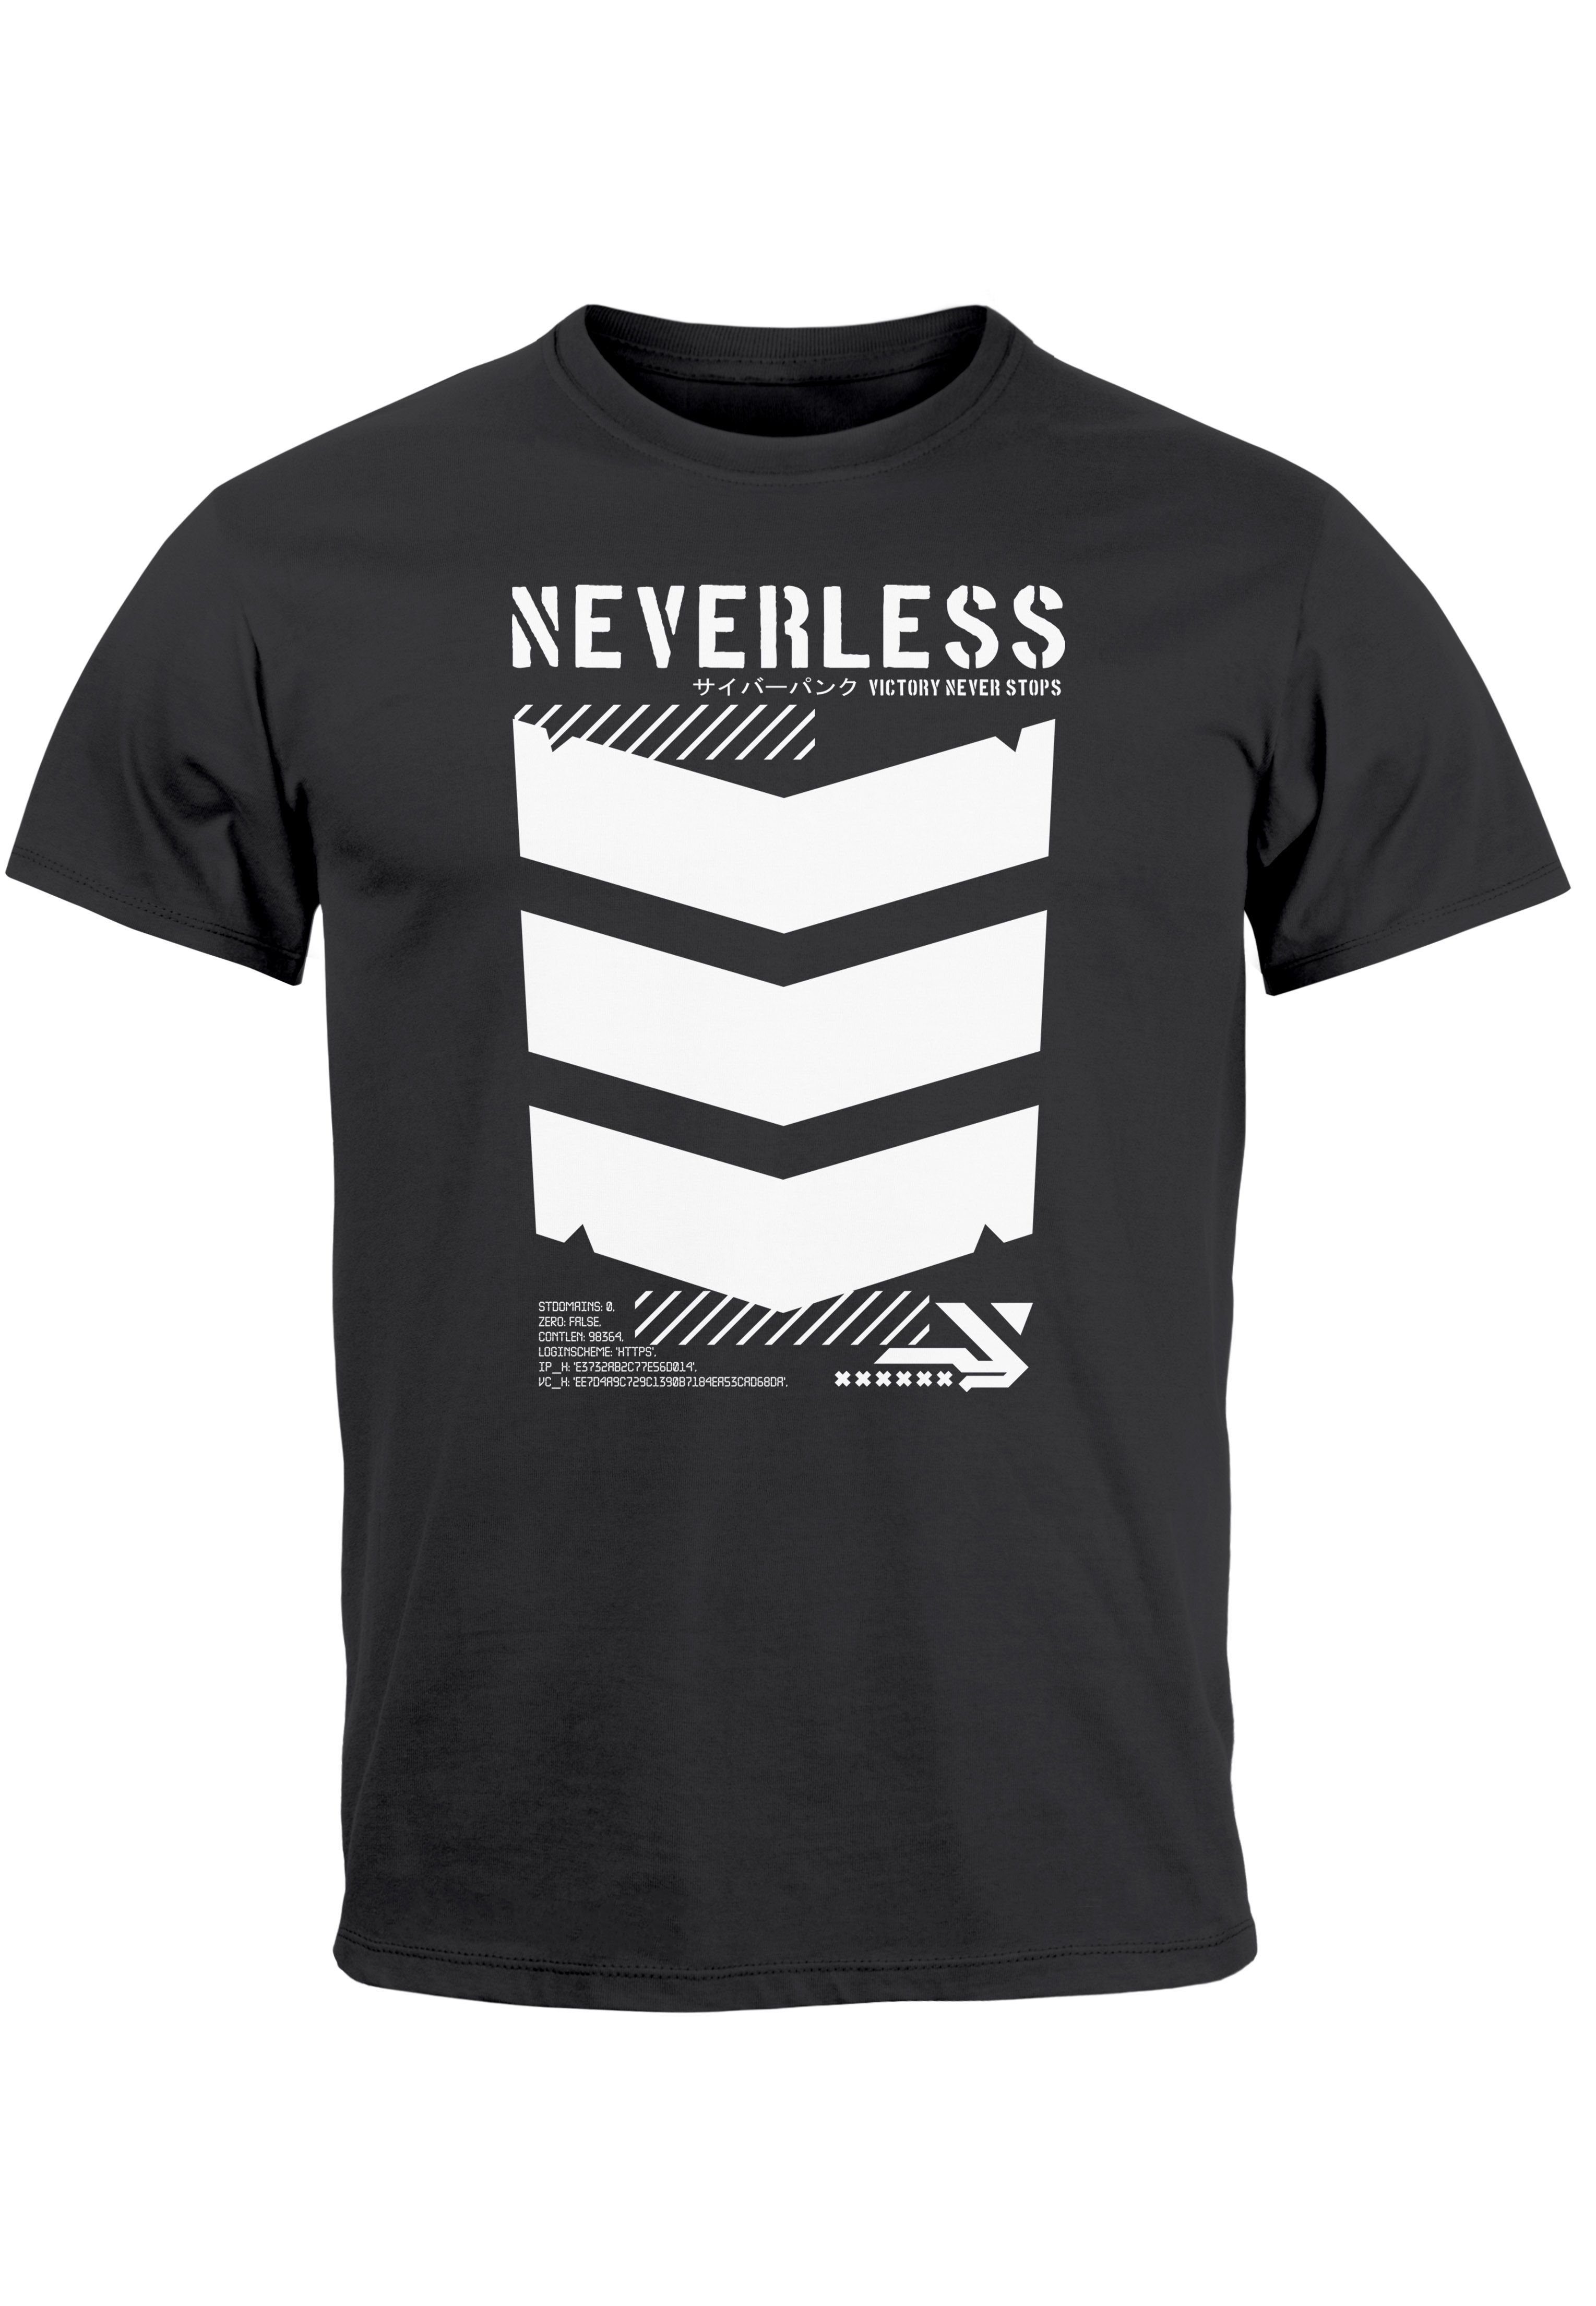 Herren Military Print-Shirt anthrazit mit Neverless Streetstyle Fas Techwear Japanese Trend Print Motive T-Shirt